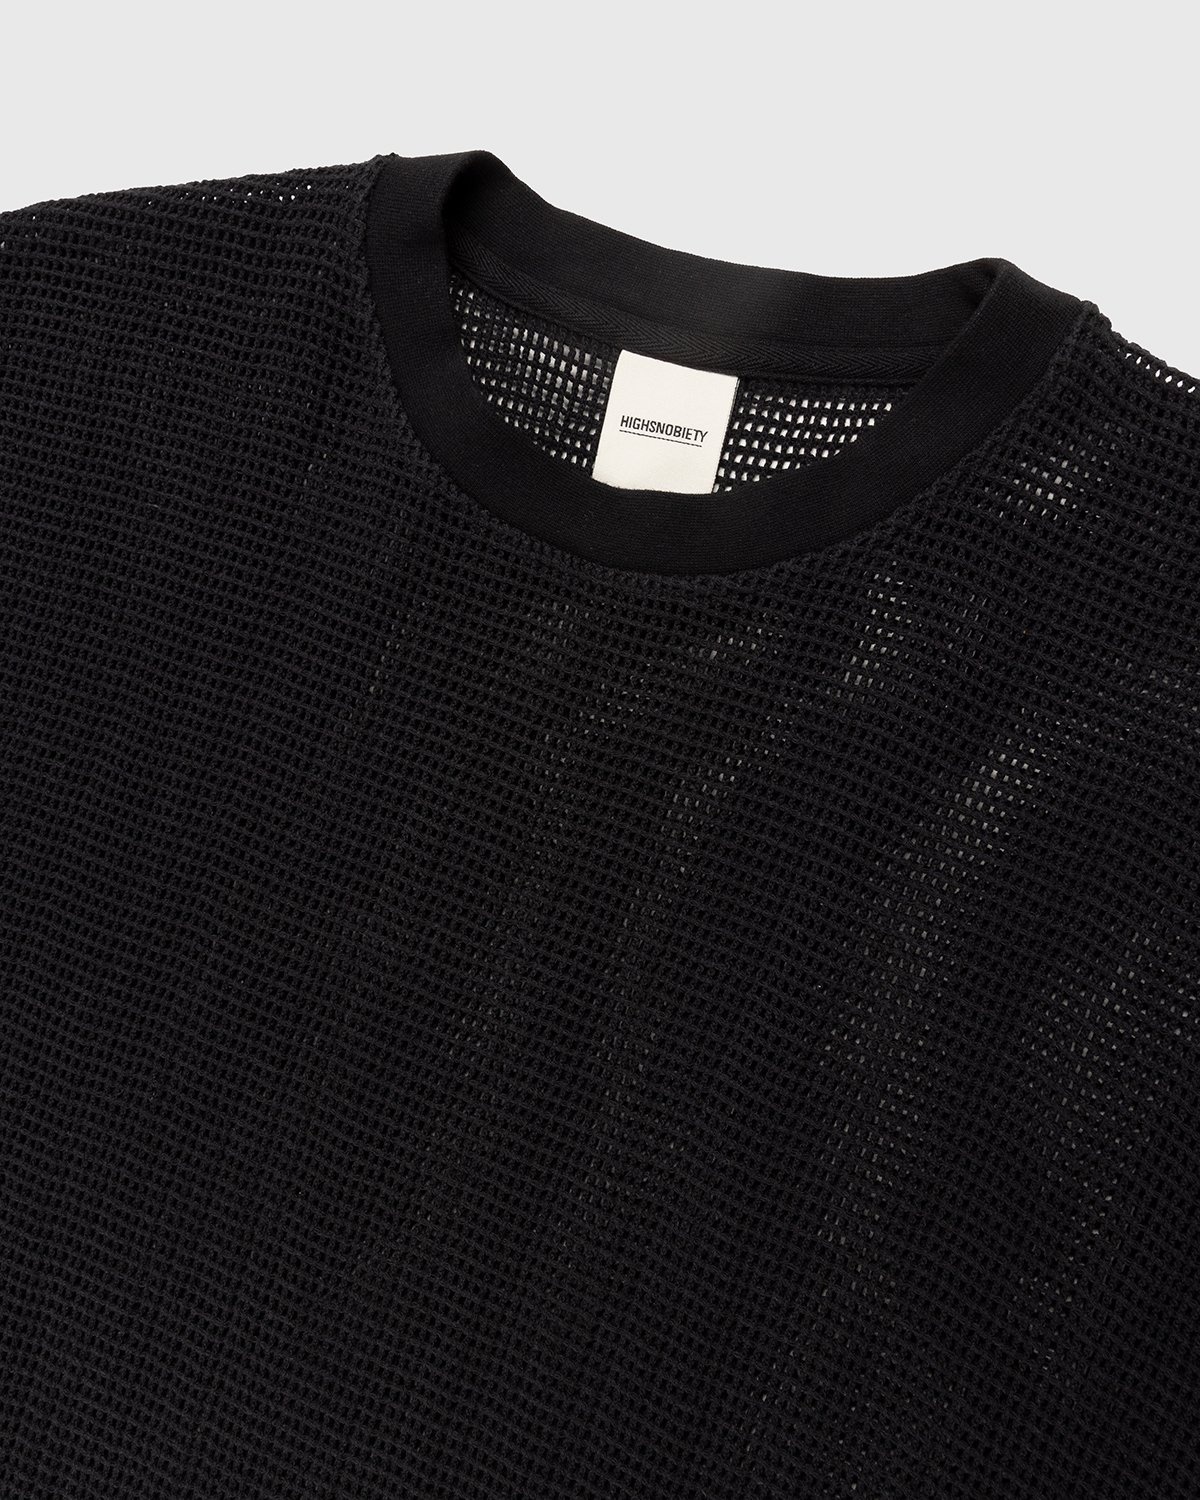 Highsnobiety – Knit Mesh Jersey T-Shirt Black - Tops - Black - Image 4